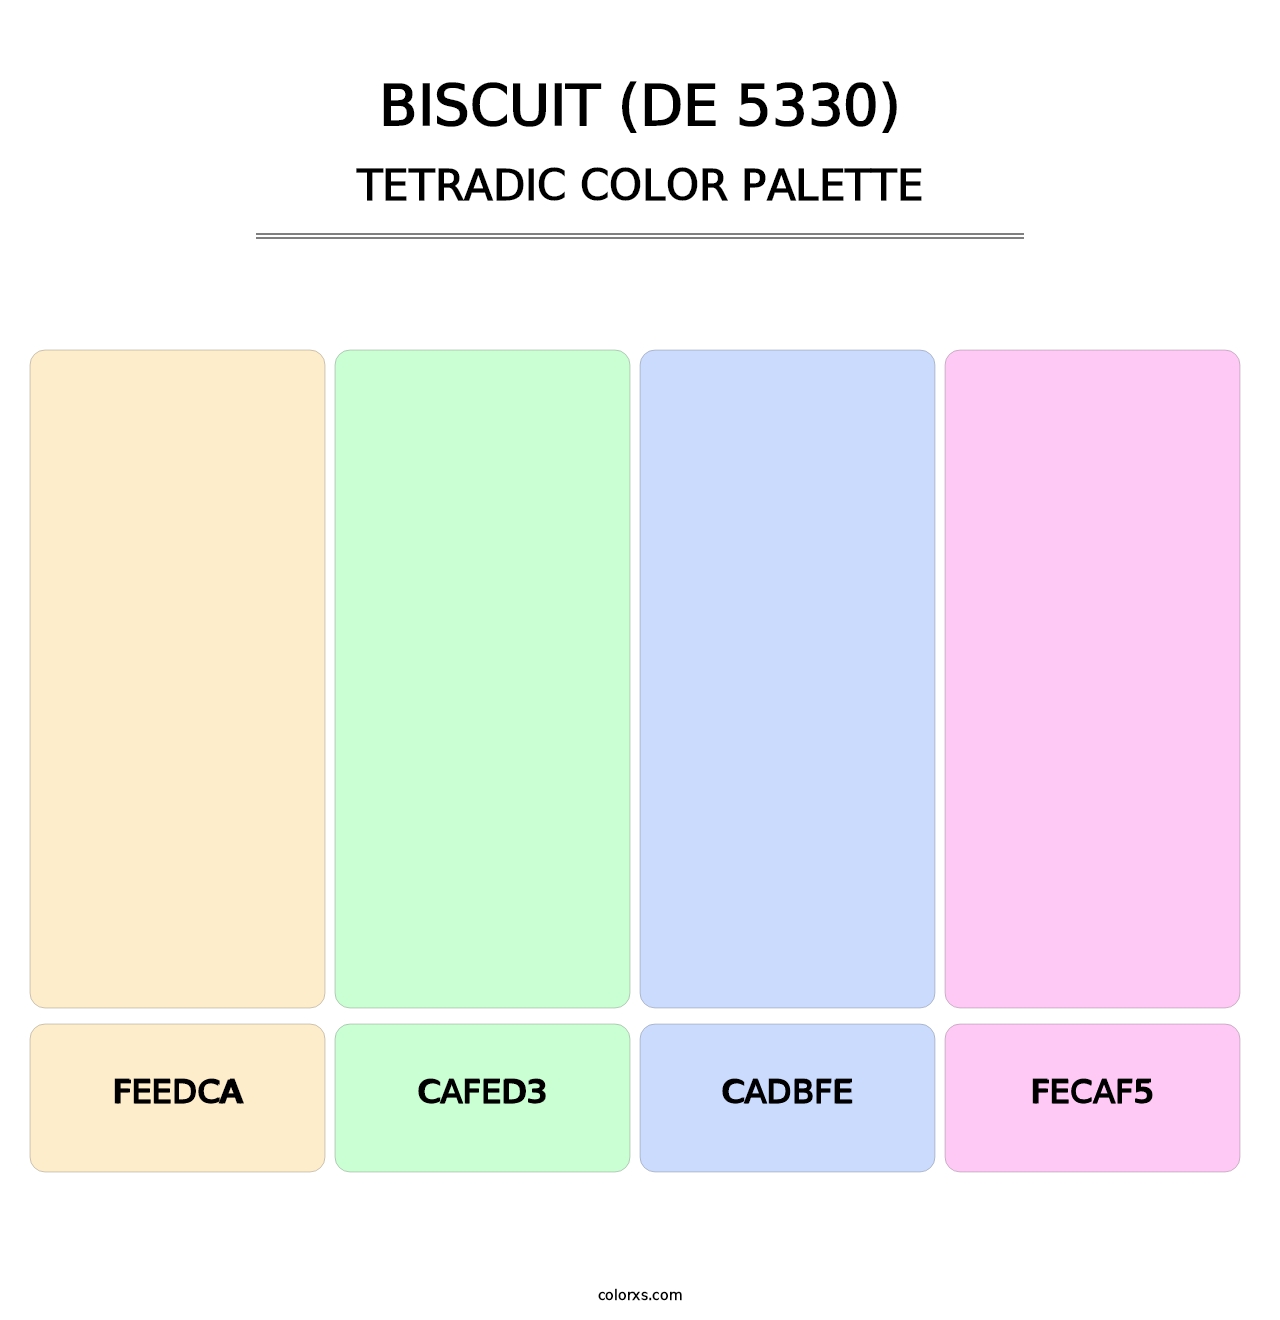 Biscuit (DE 5330) - Tetradic Color Palette